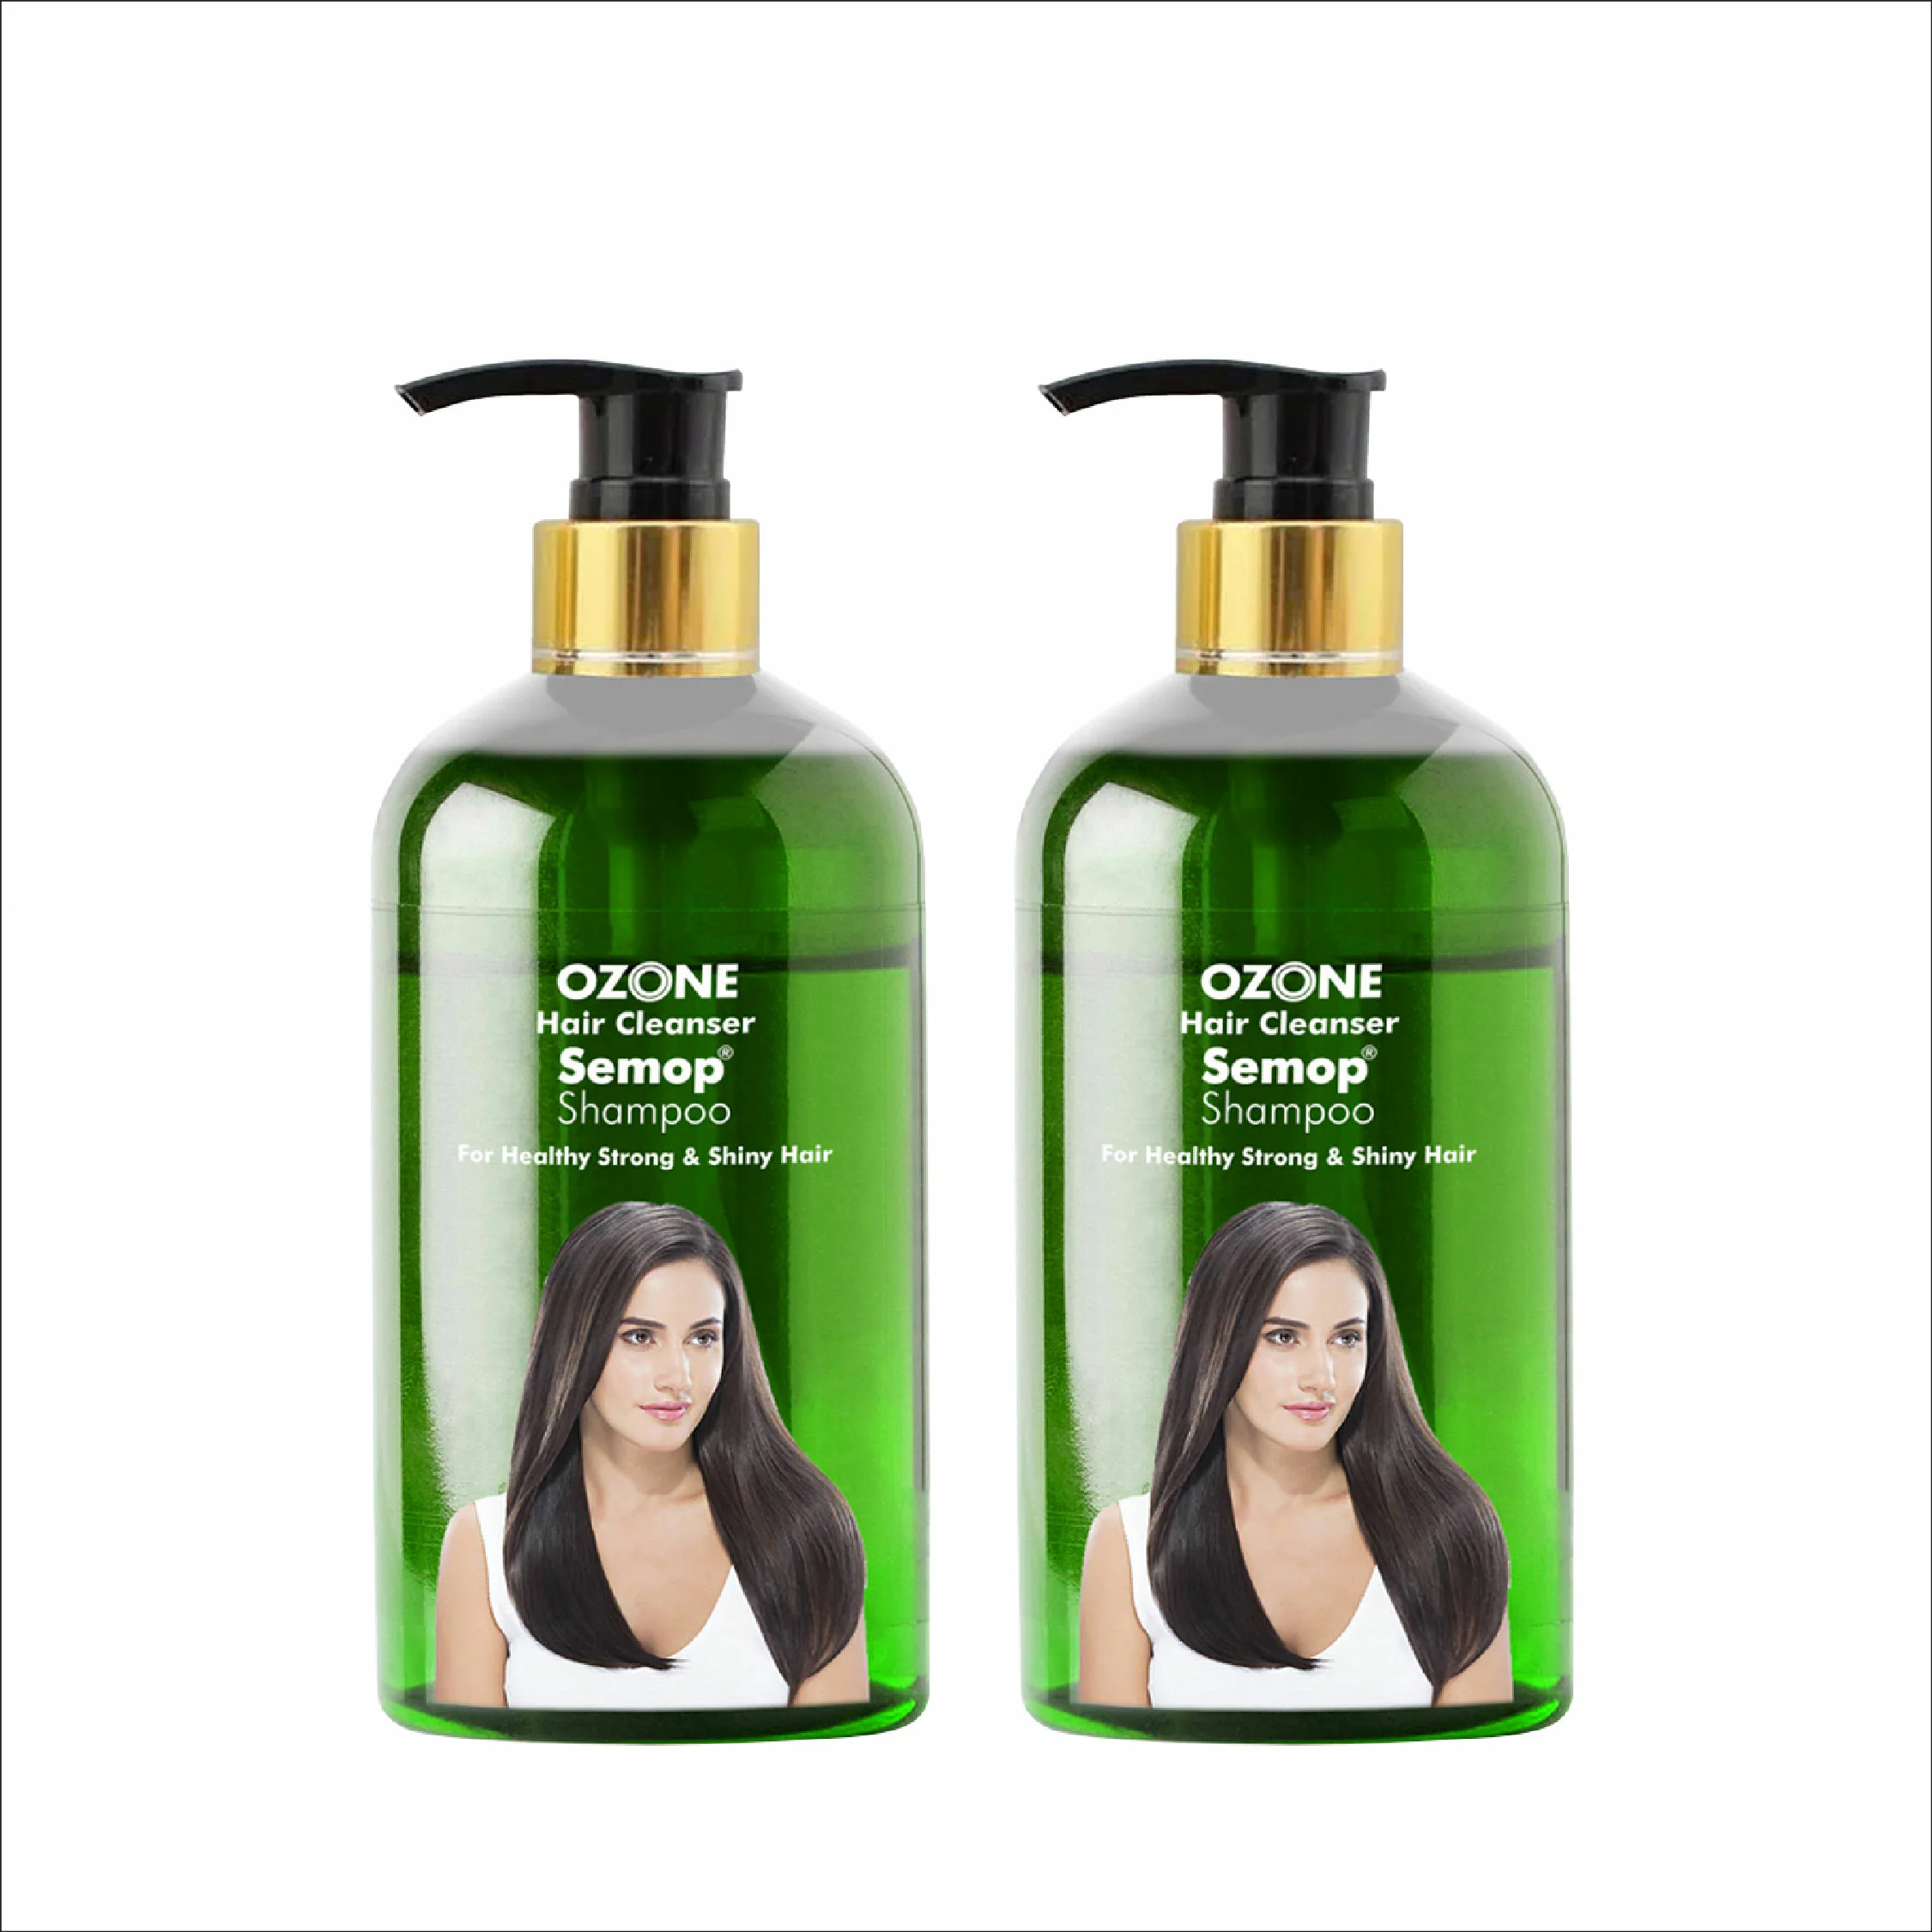 Ozone Semop Hair Cleanser Shampoo for Healthy, Strong & Shiny Hair - 300ml  (Pack of 2) - JioMart